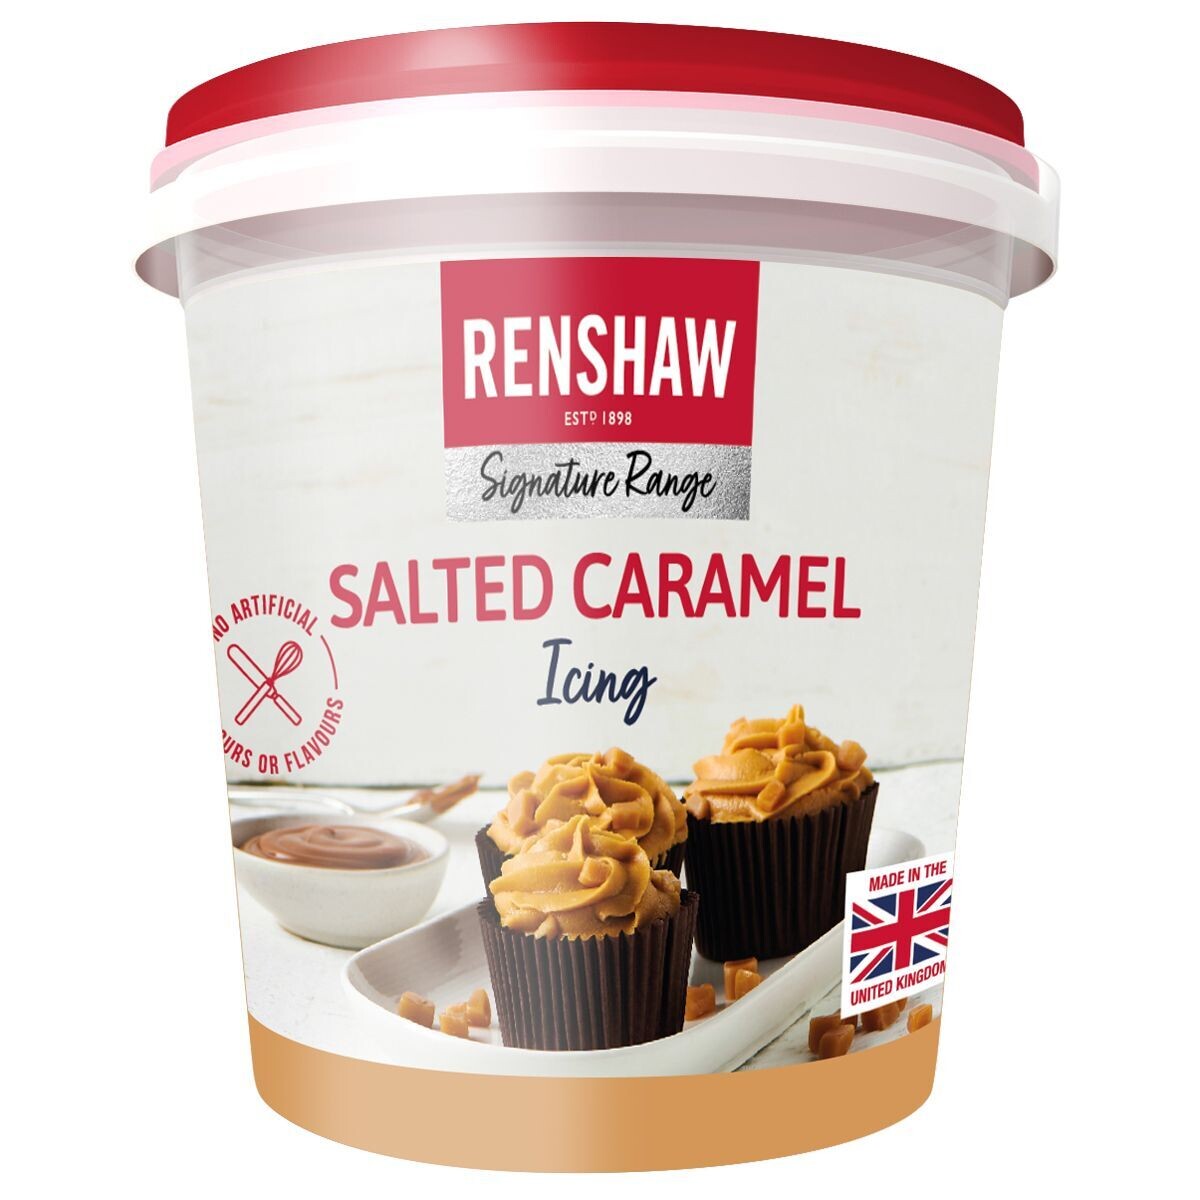 Renshaw Salted Caramel Icing 400g - Γλάσο Αλατισμένης Καραμέλας